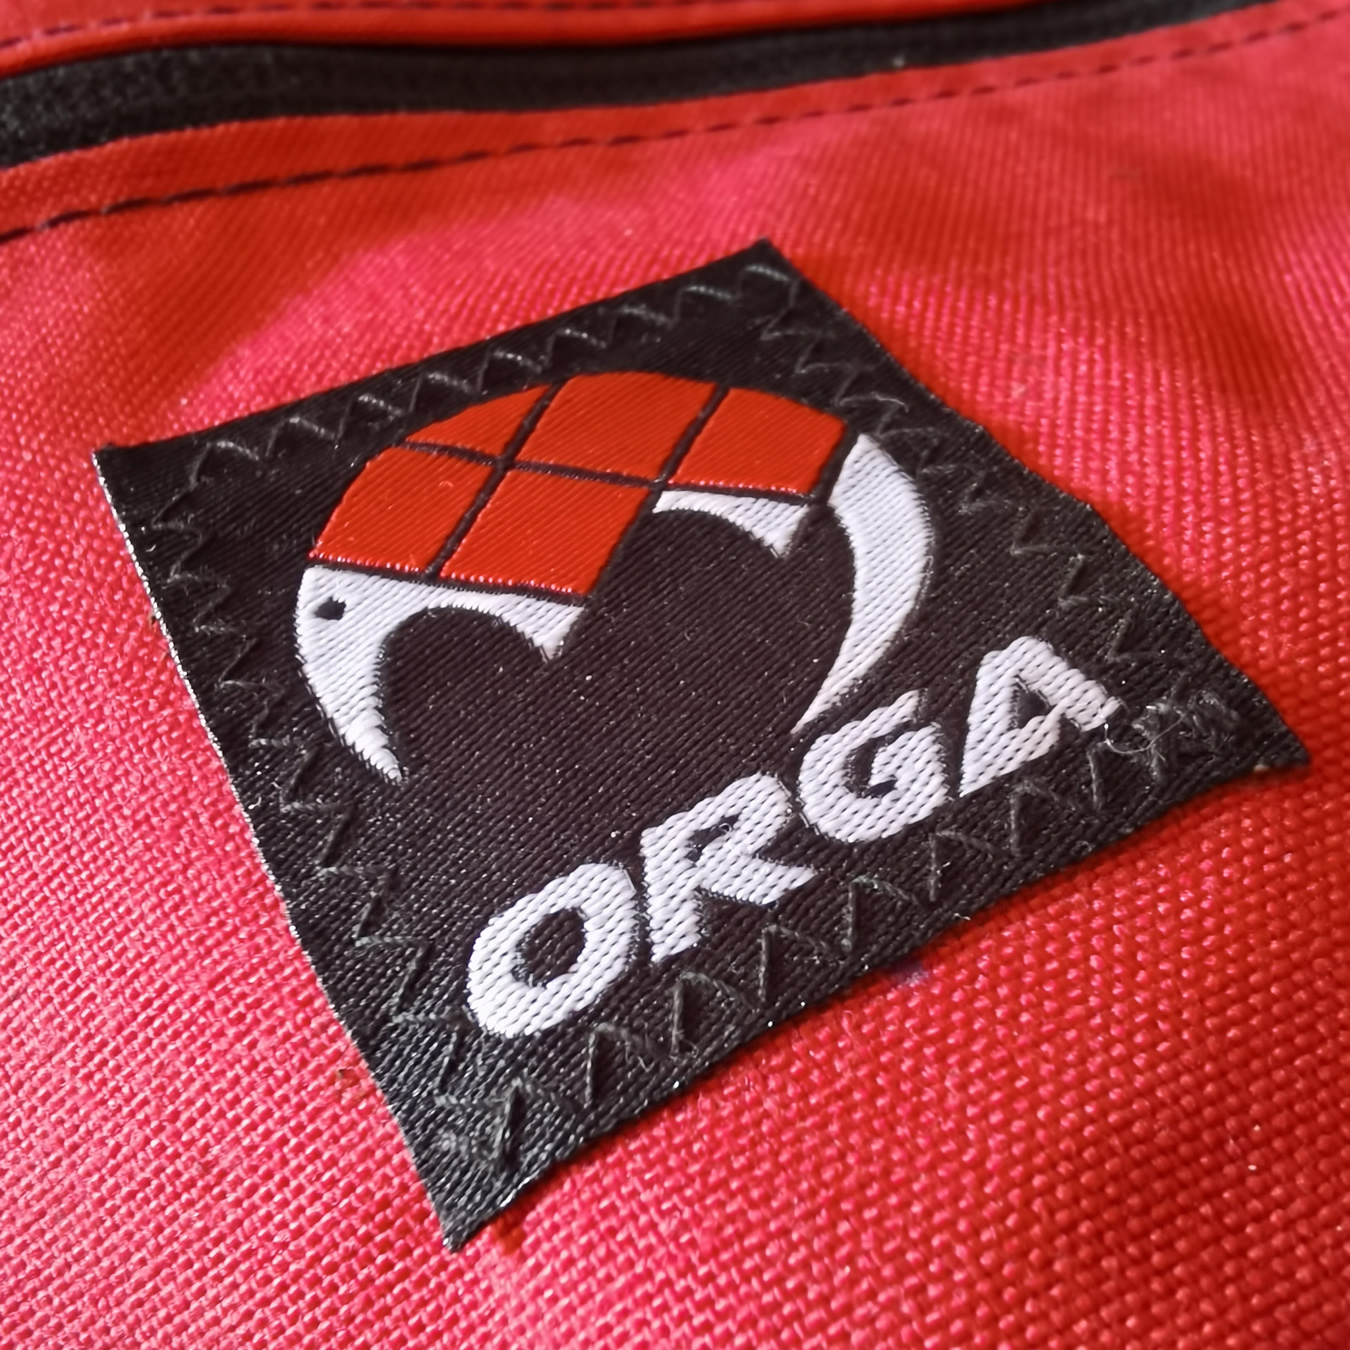 Orga brand label